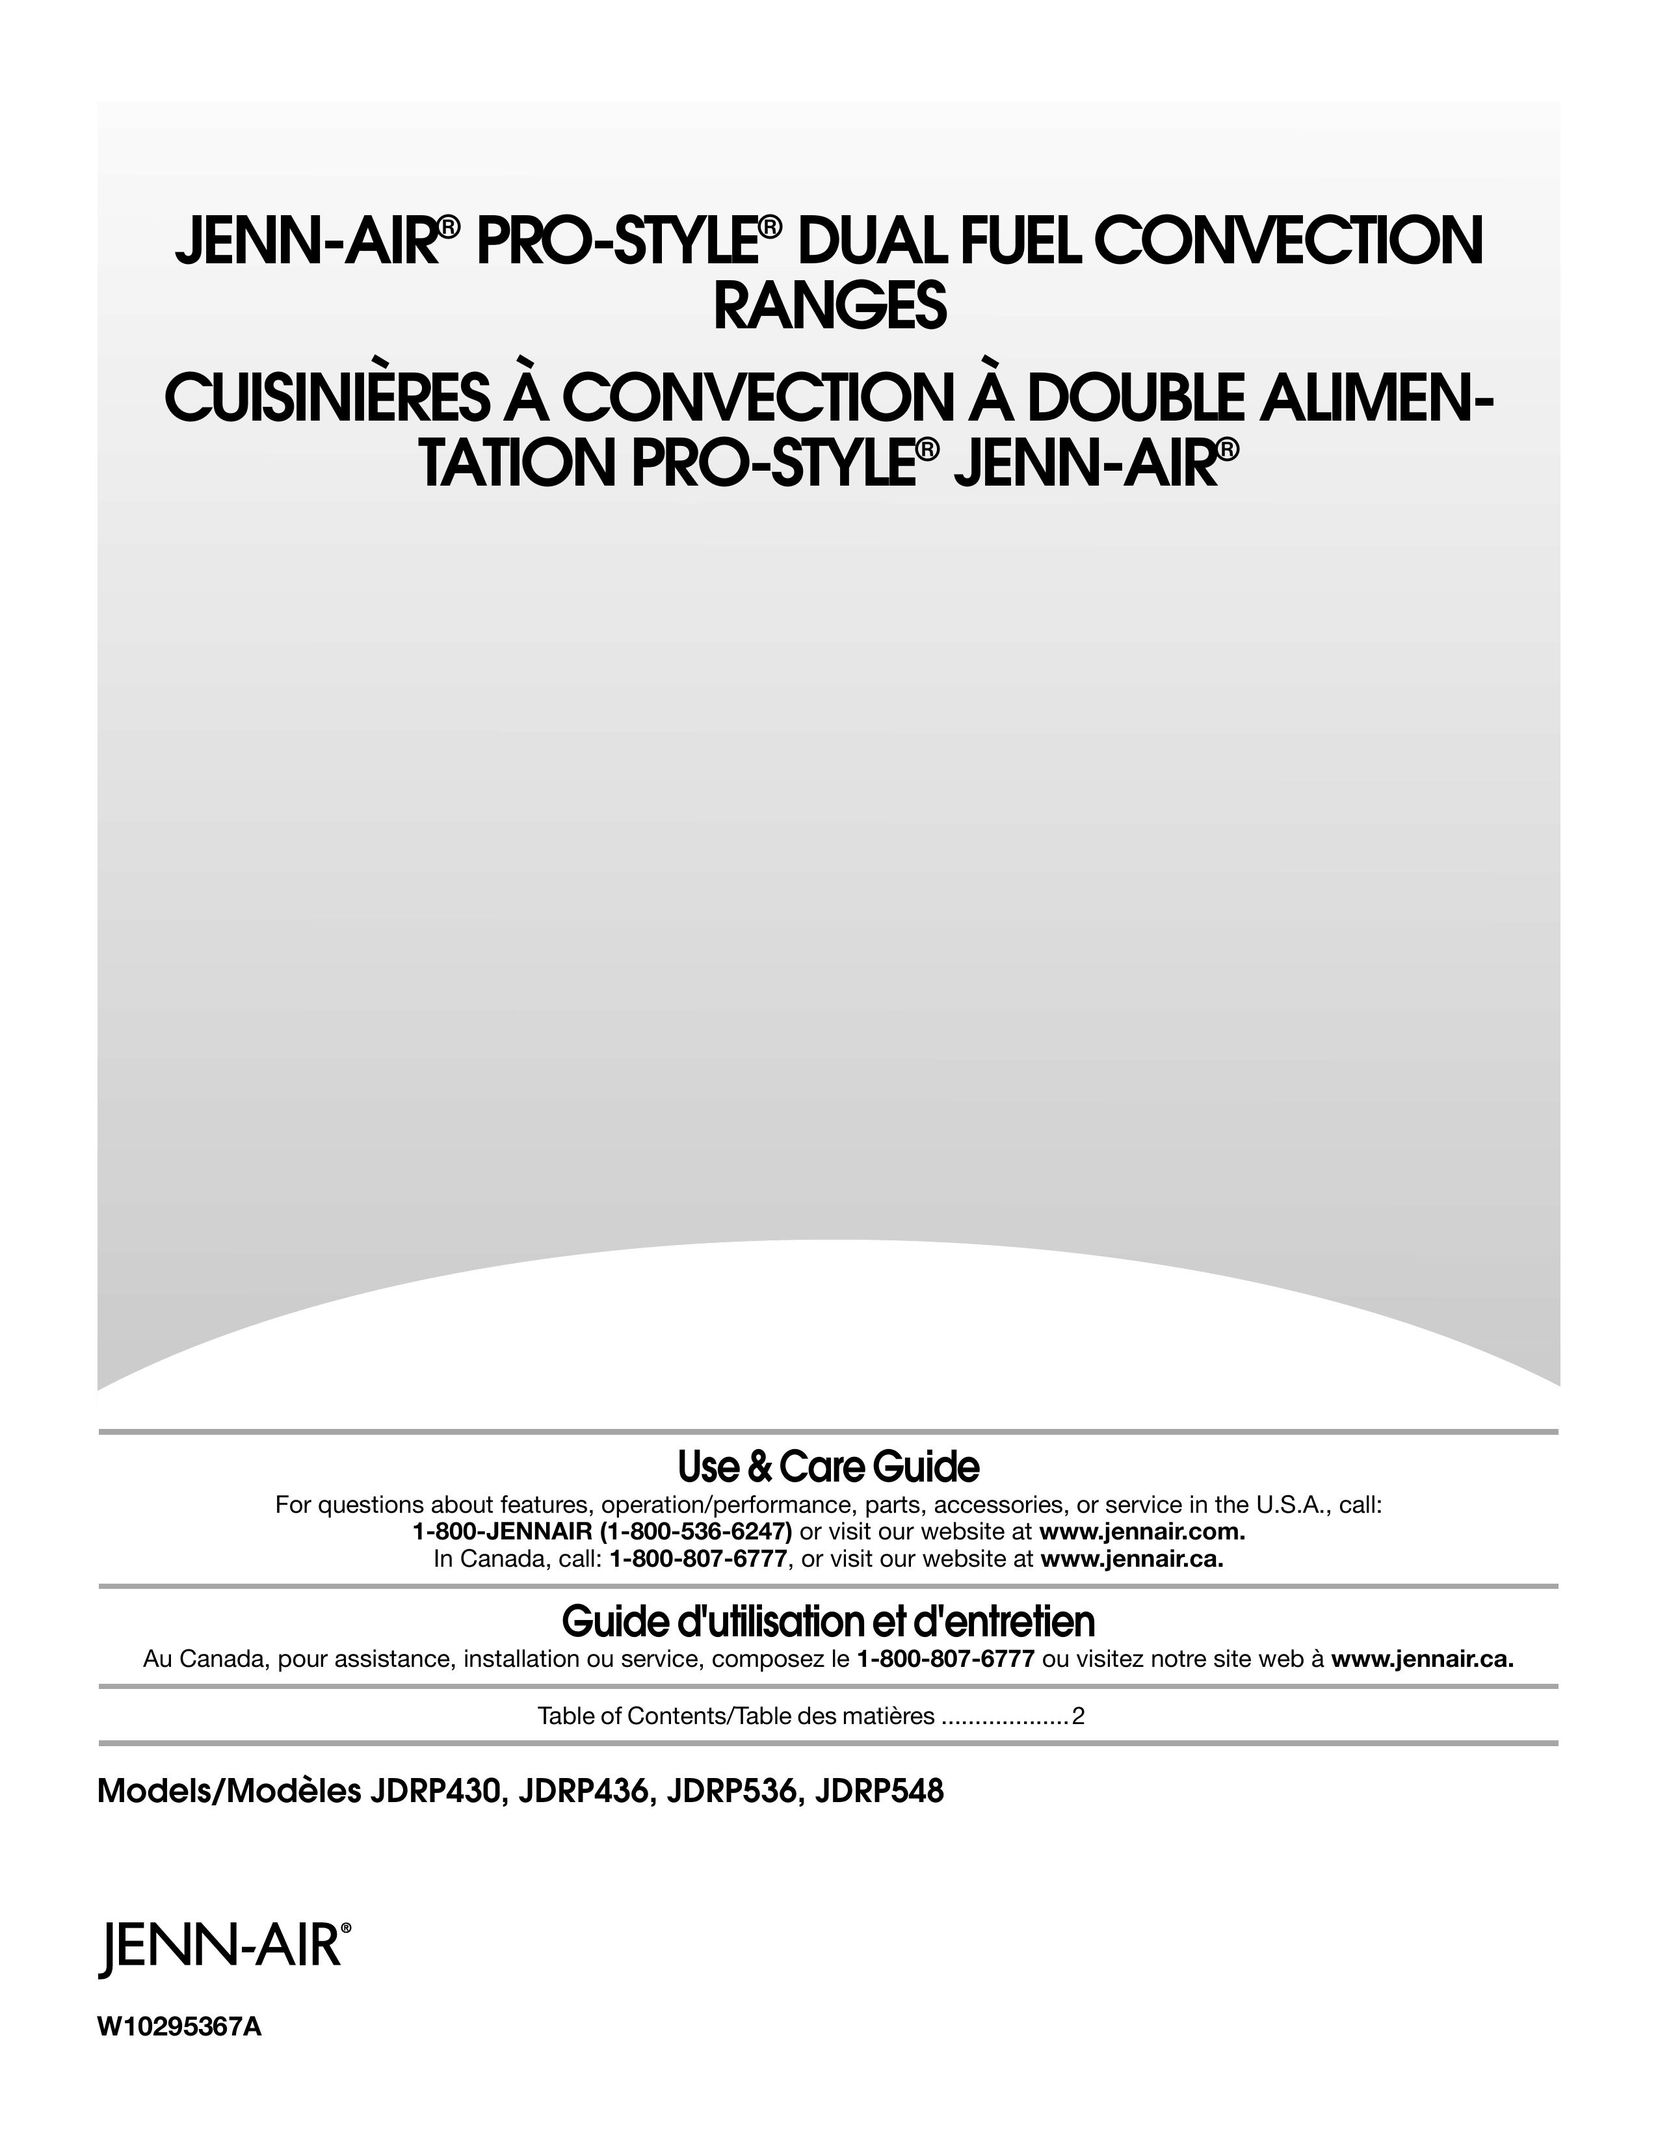 Jenn-Air JDRP430 Range User Manual